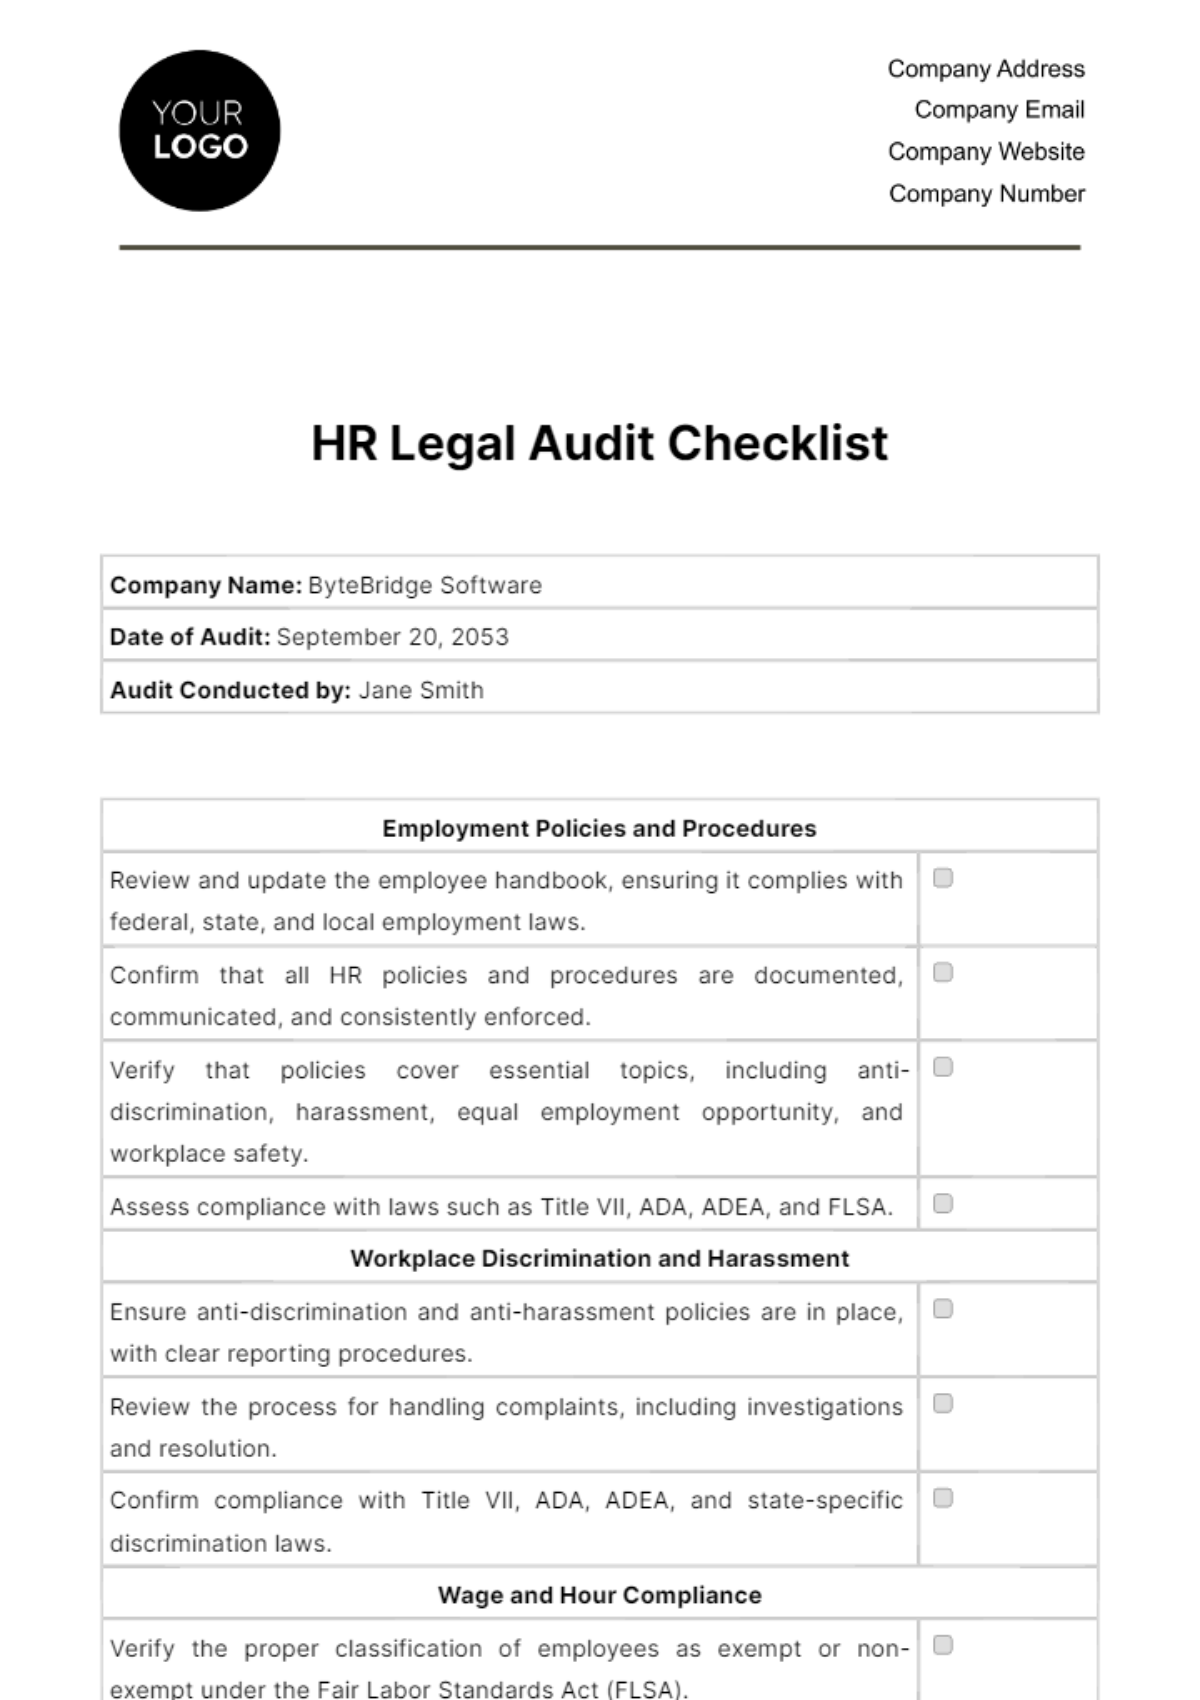 Free HR Legal Audit Checklist Template